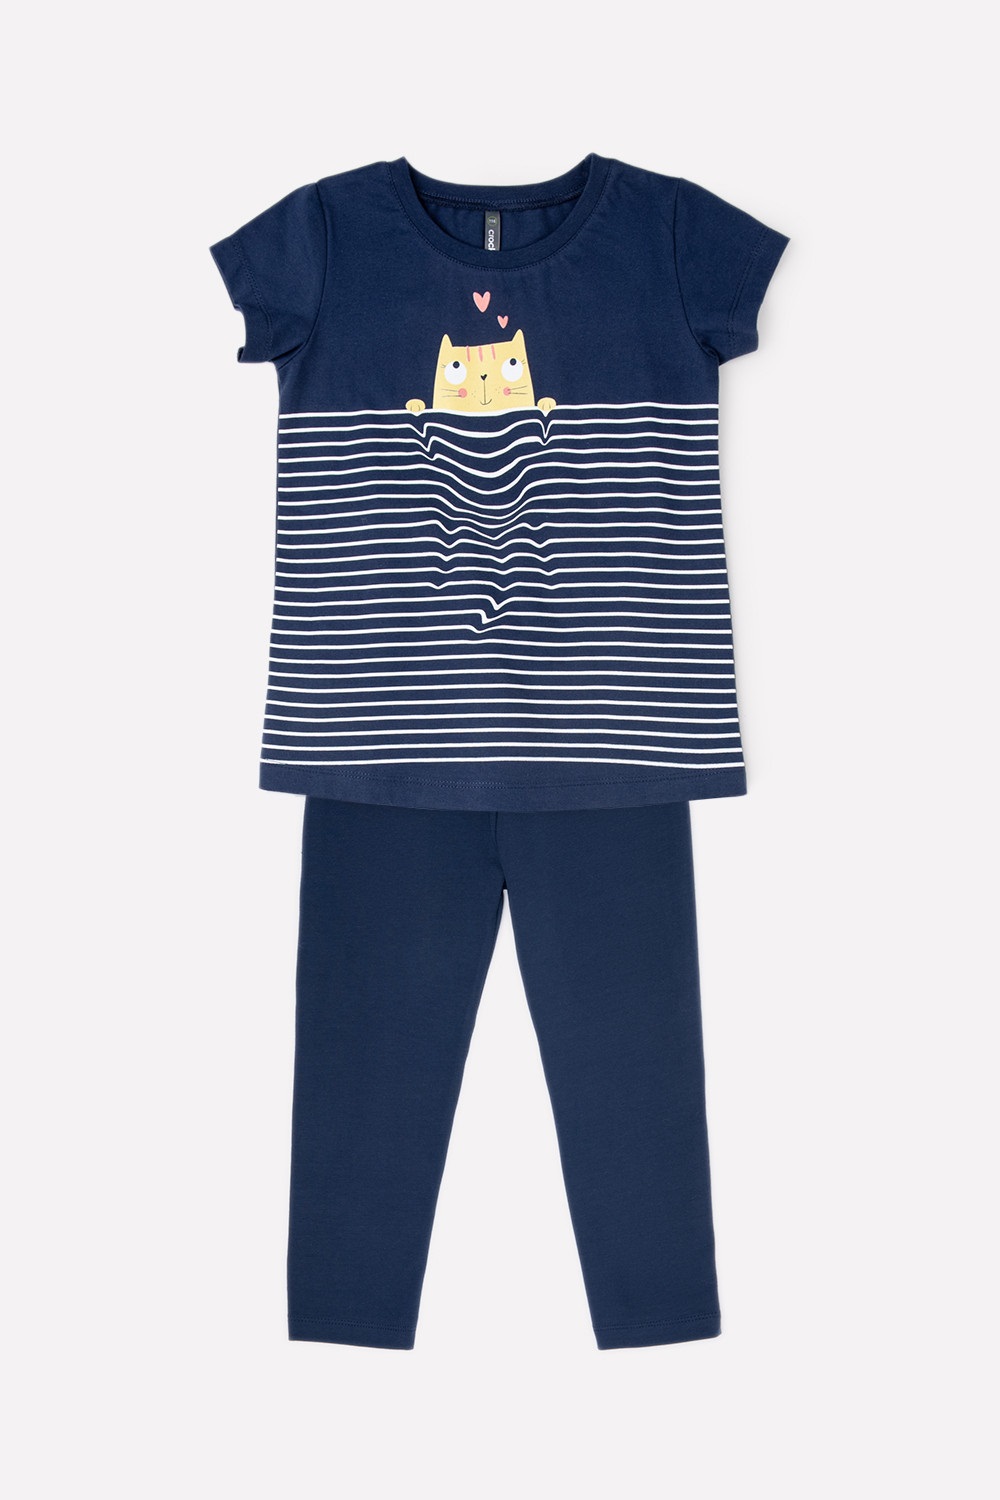 Комплект д/д фуфайка(футболка)+бриджи яс.воз.морской синий. Фото N2